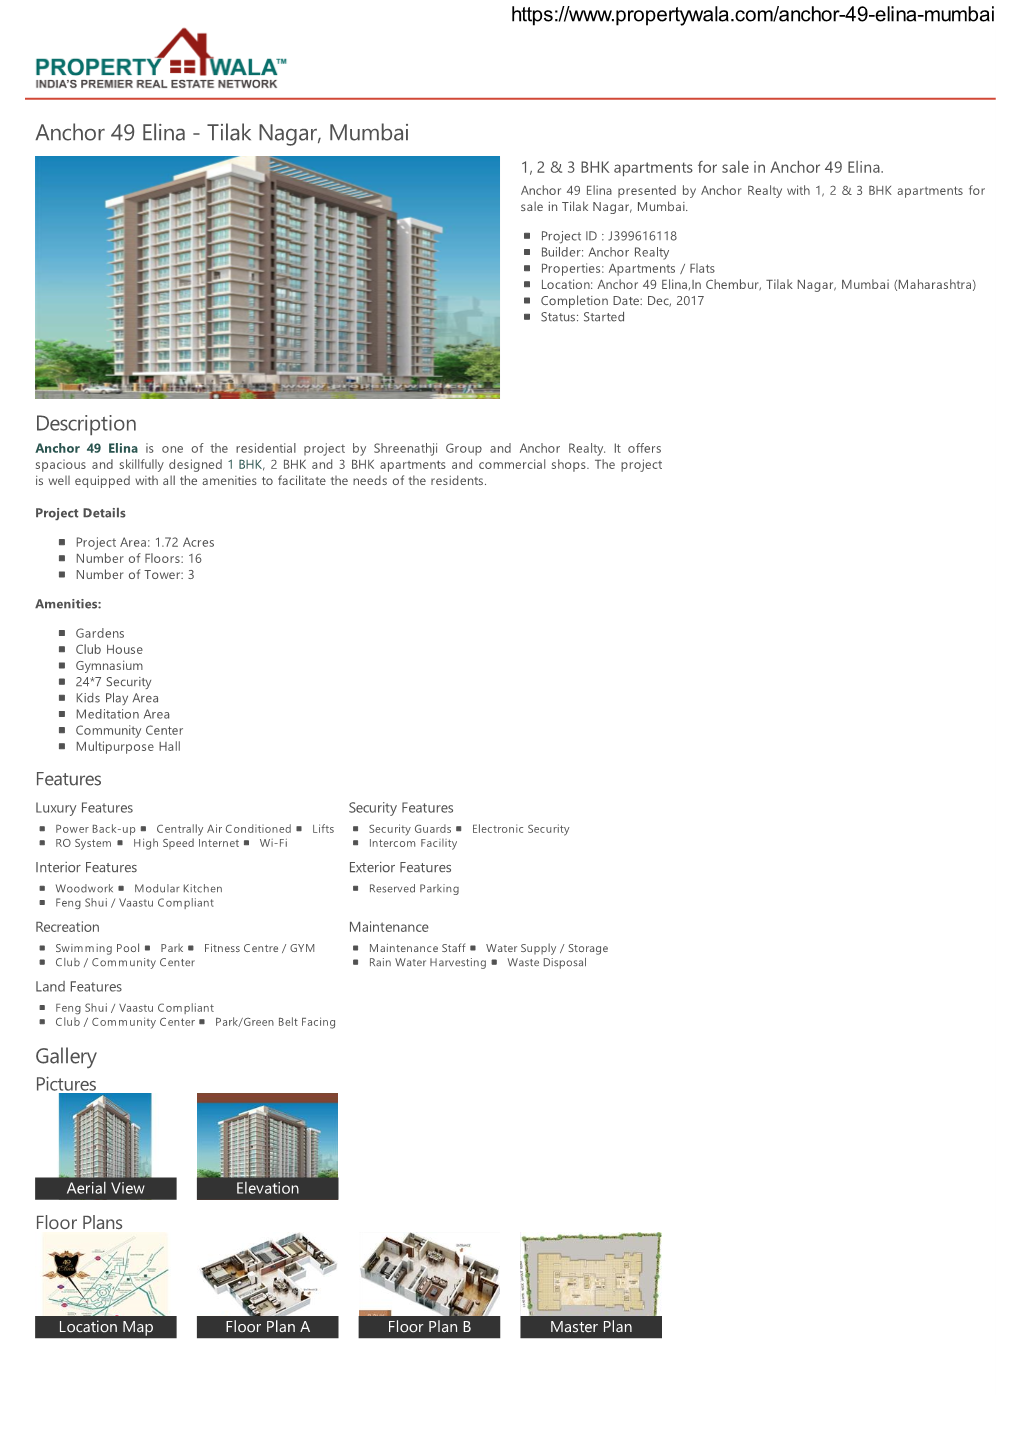 Anchor 49 Elina - Tilak Nagar, Mumbai 1, 2 & 3 BHK Apartments for Sale in Anchor 49 Elina